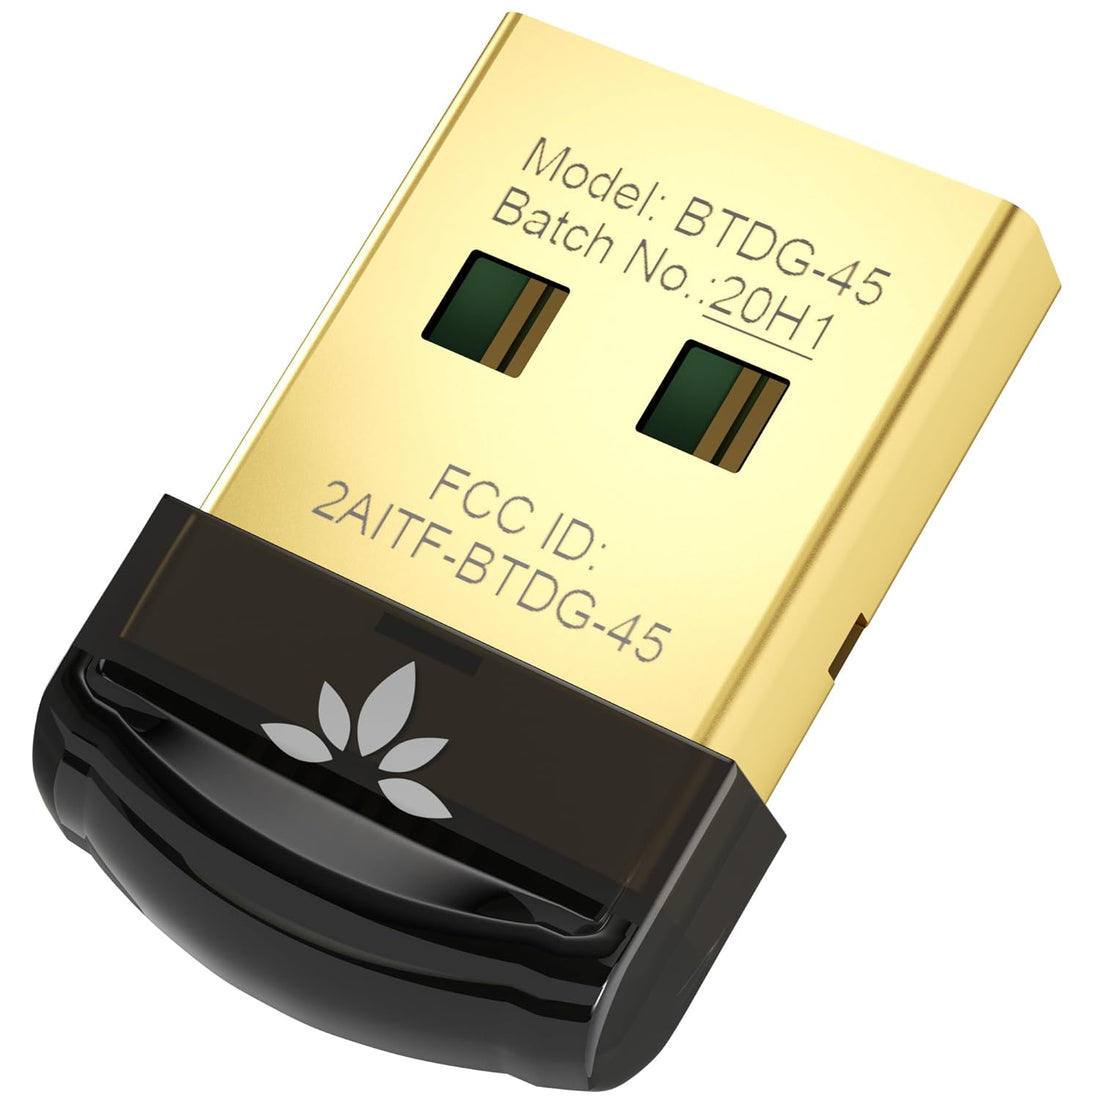 Avantree DG45 - Bluetooth 5.0 USB Dongle, Bluetooth Adapter for PC Windows 11 / 10 / 8.1 / 8